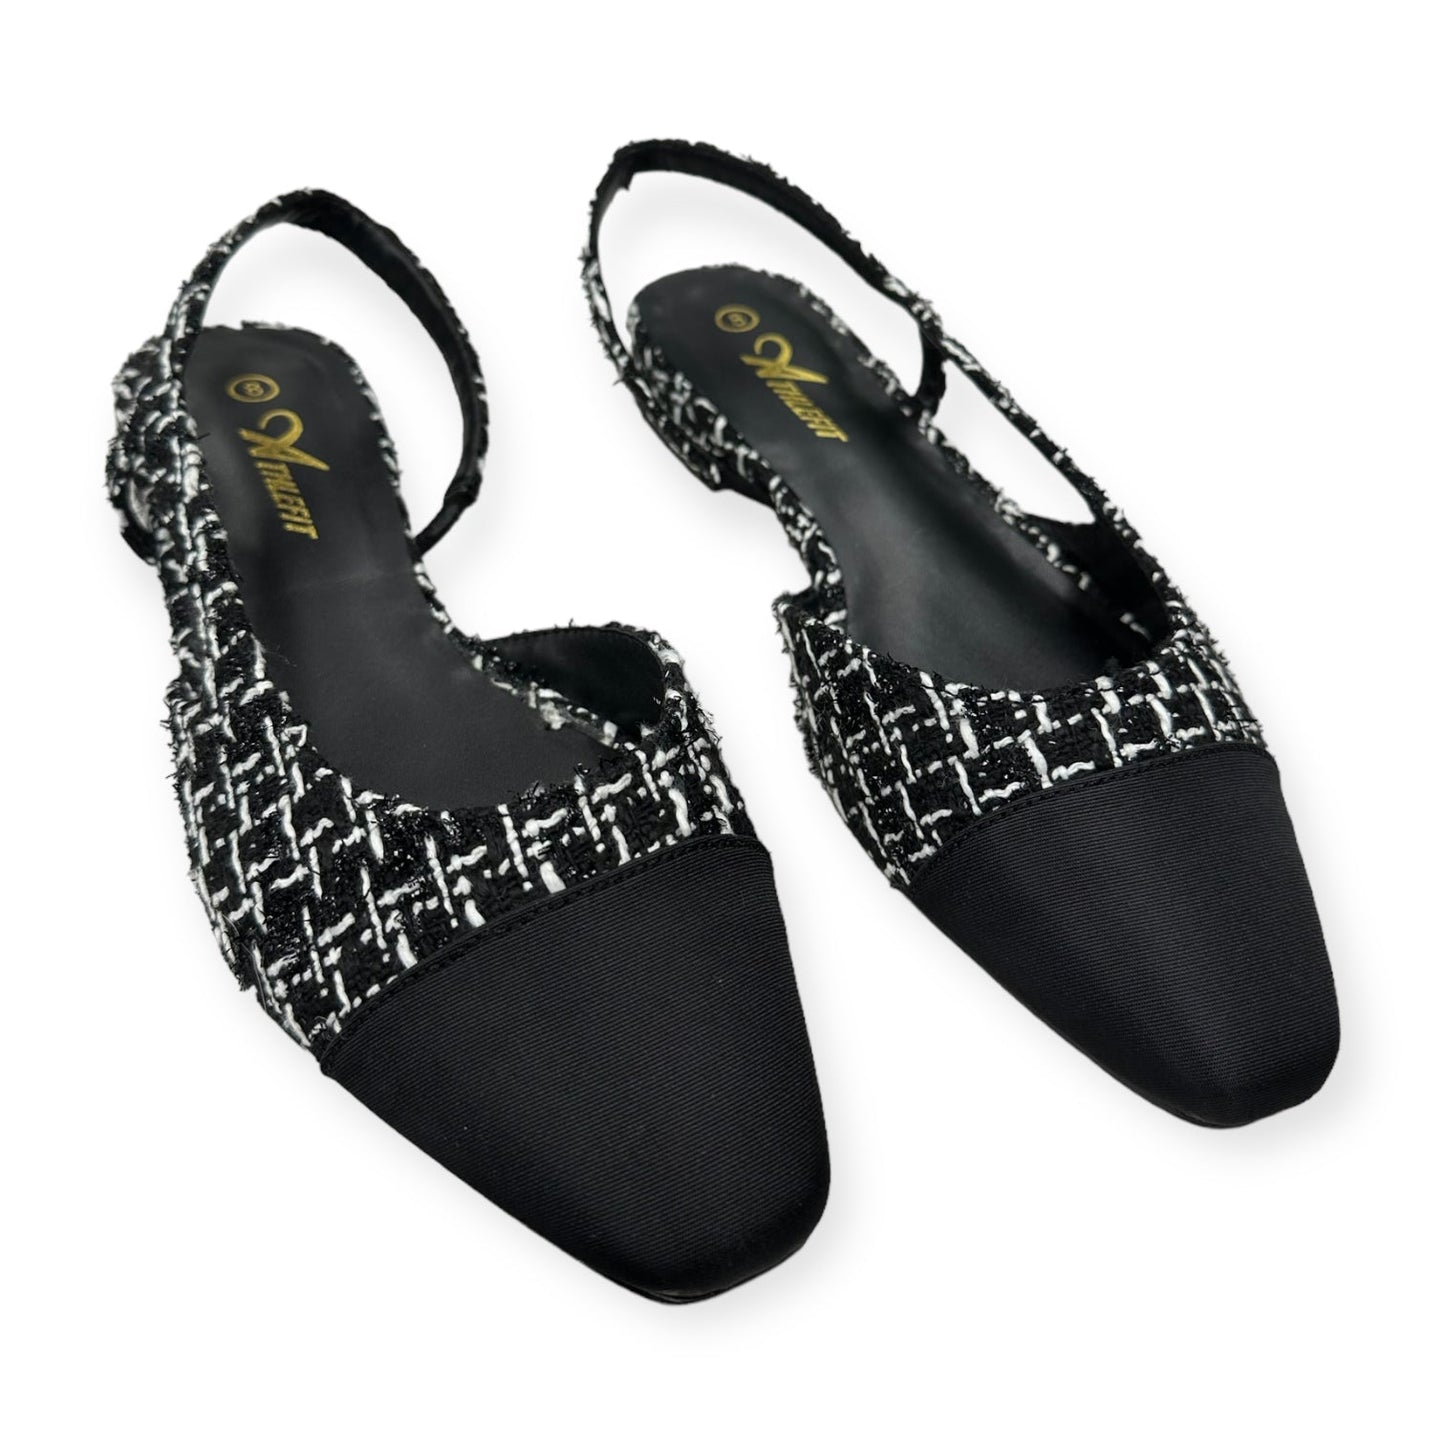 Black & White Sandals Flats Clothes Mentor, Size 8